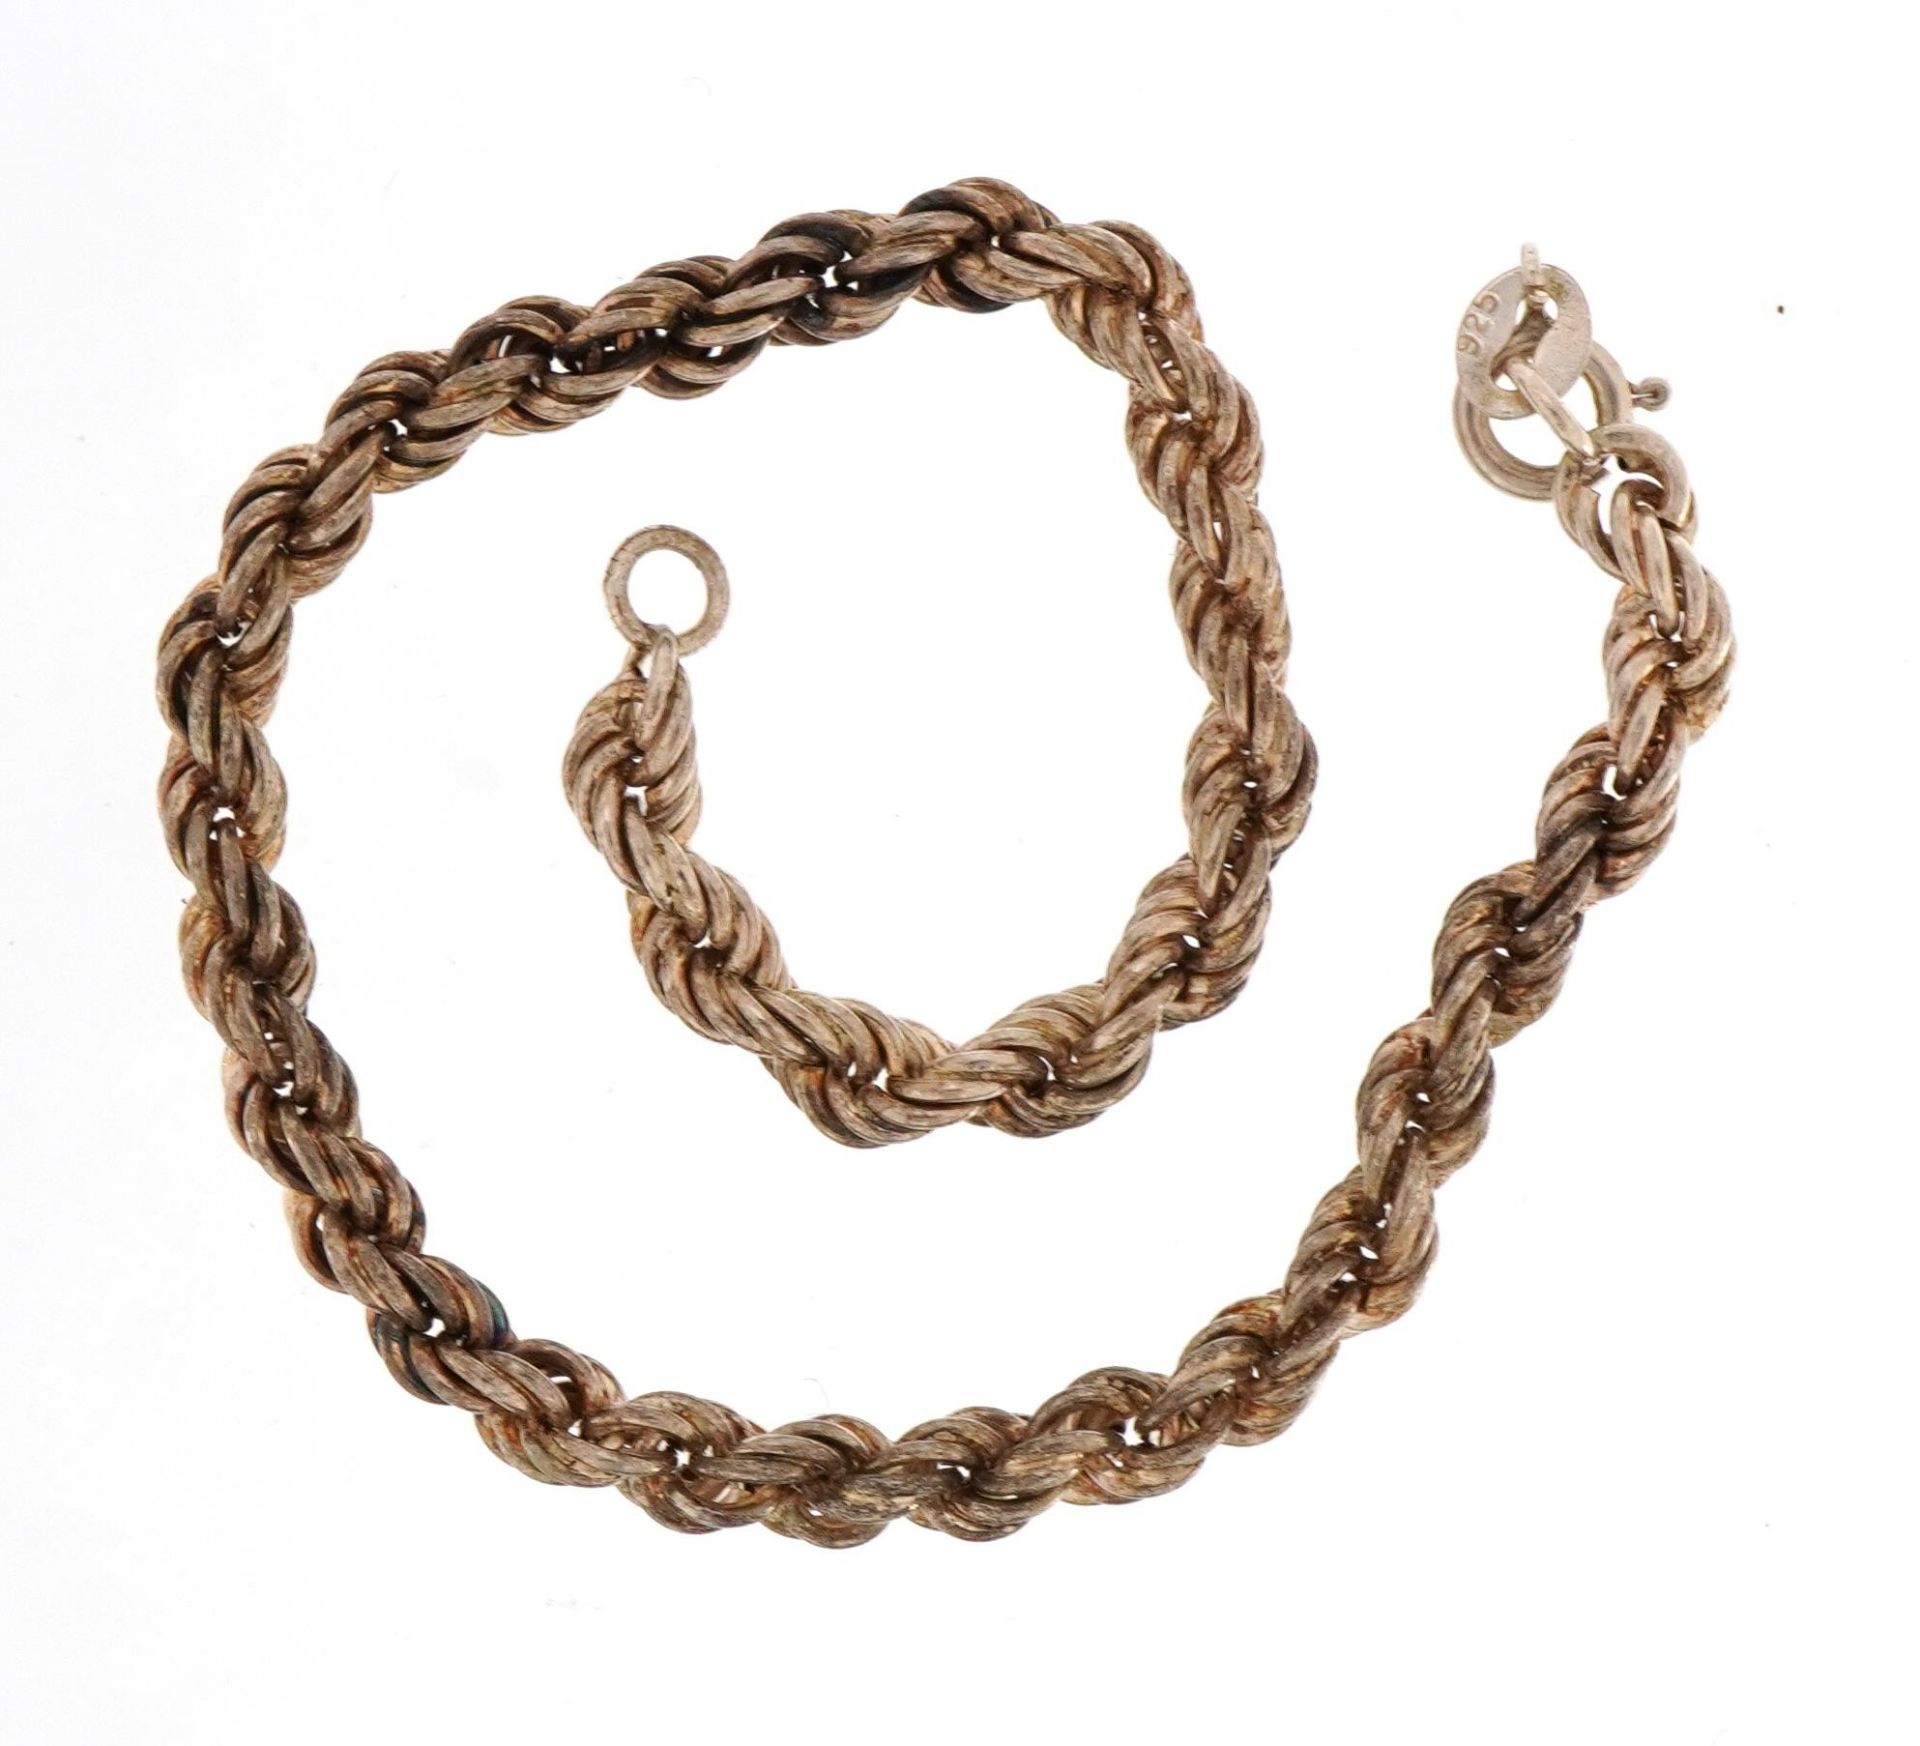 Silver rope twist bracelet stamped 925, 8.5cm in length, 4.6g - Image 3 of 3